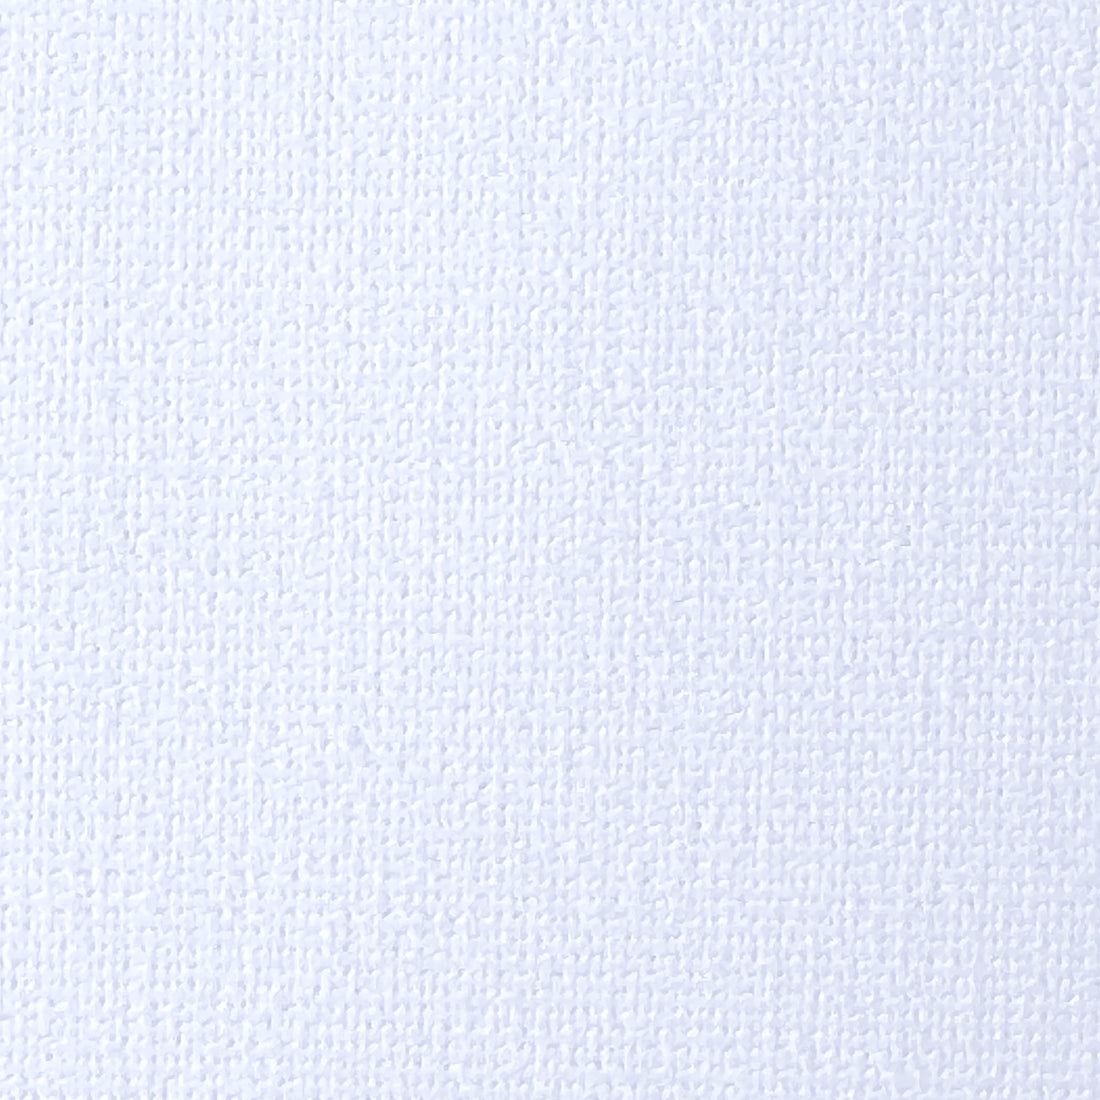 MOAB Anasazi Canvas Premium 350gsm